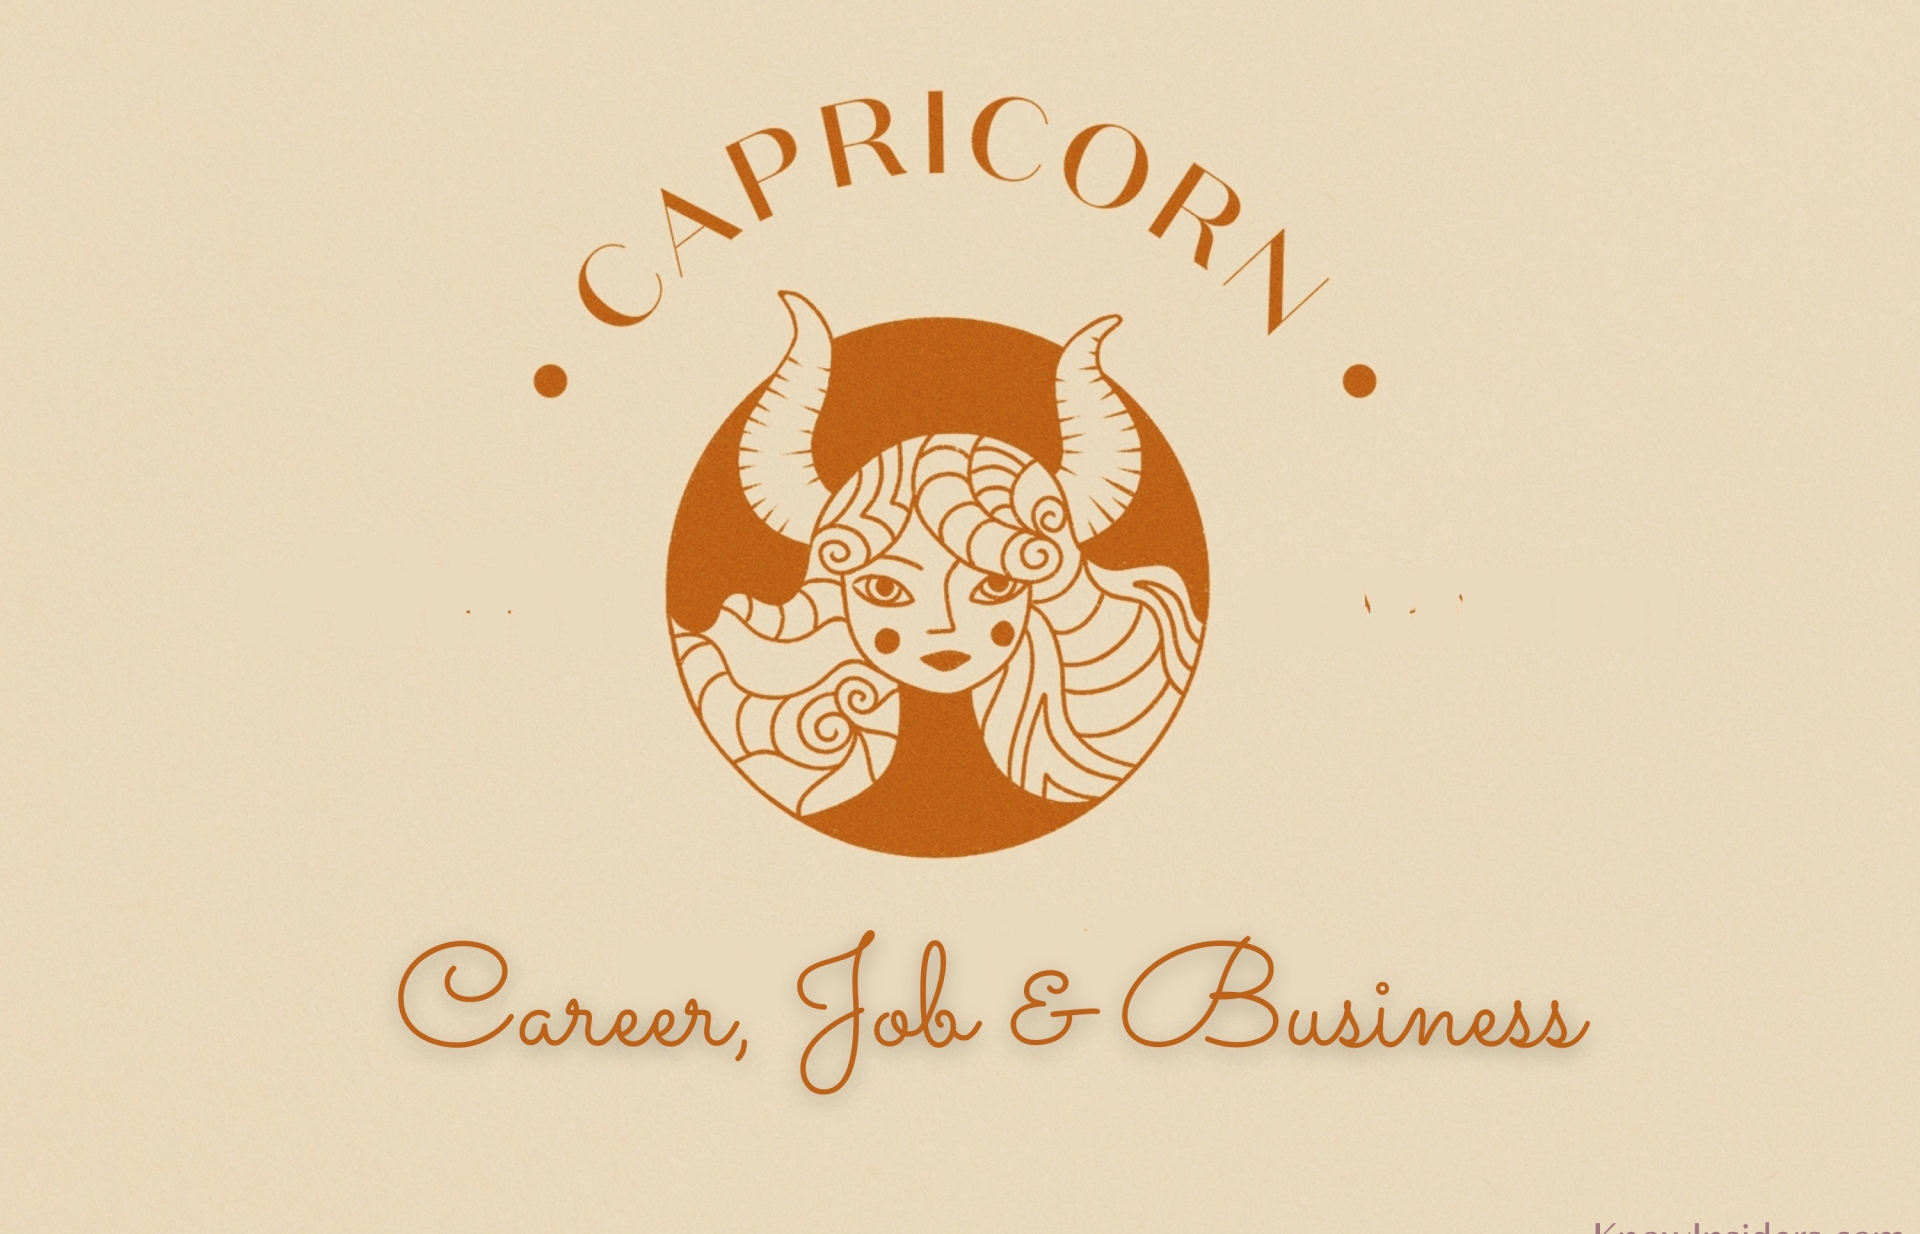 capricorn horoscope astrological predictions for career jobs business